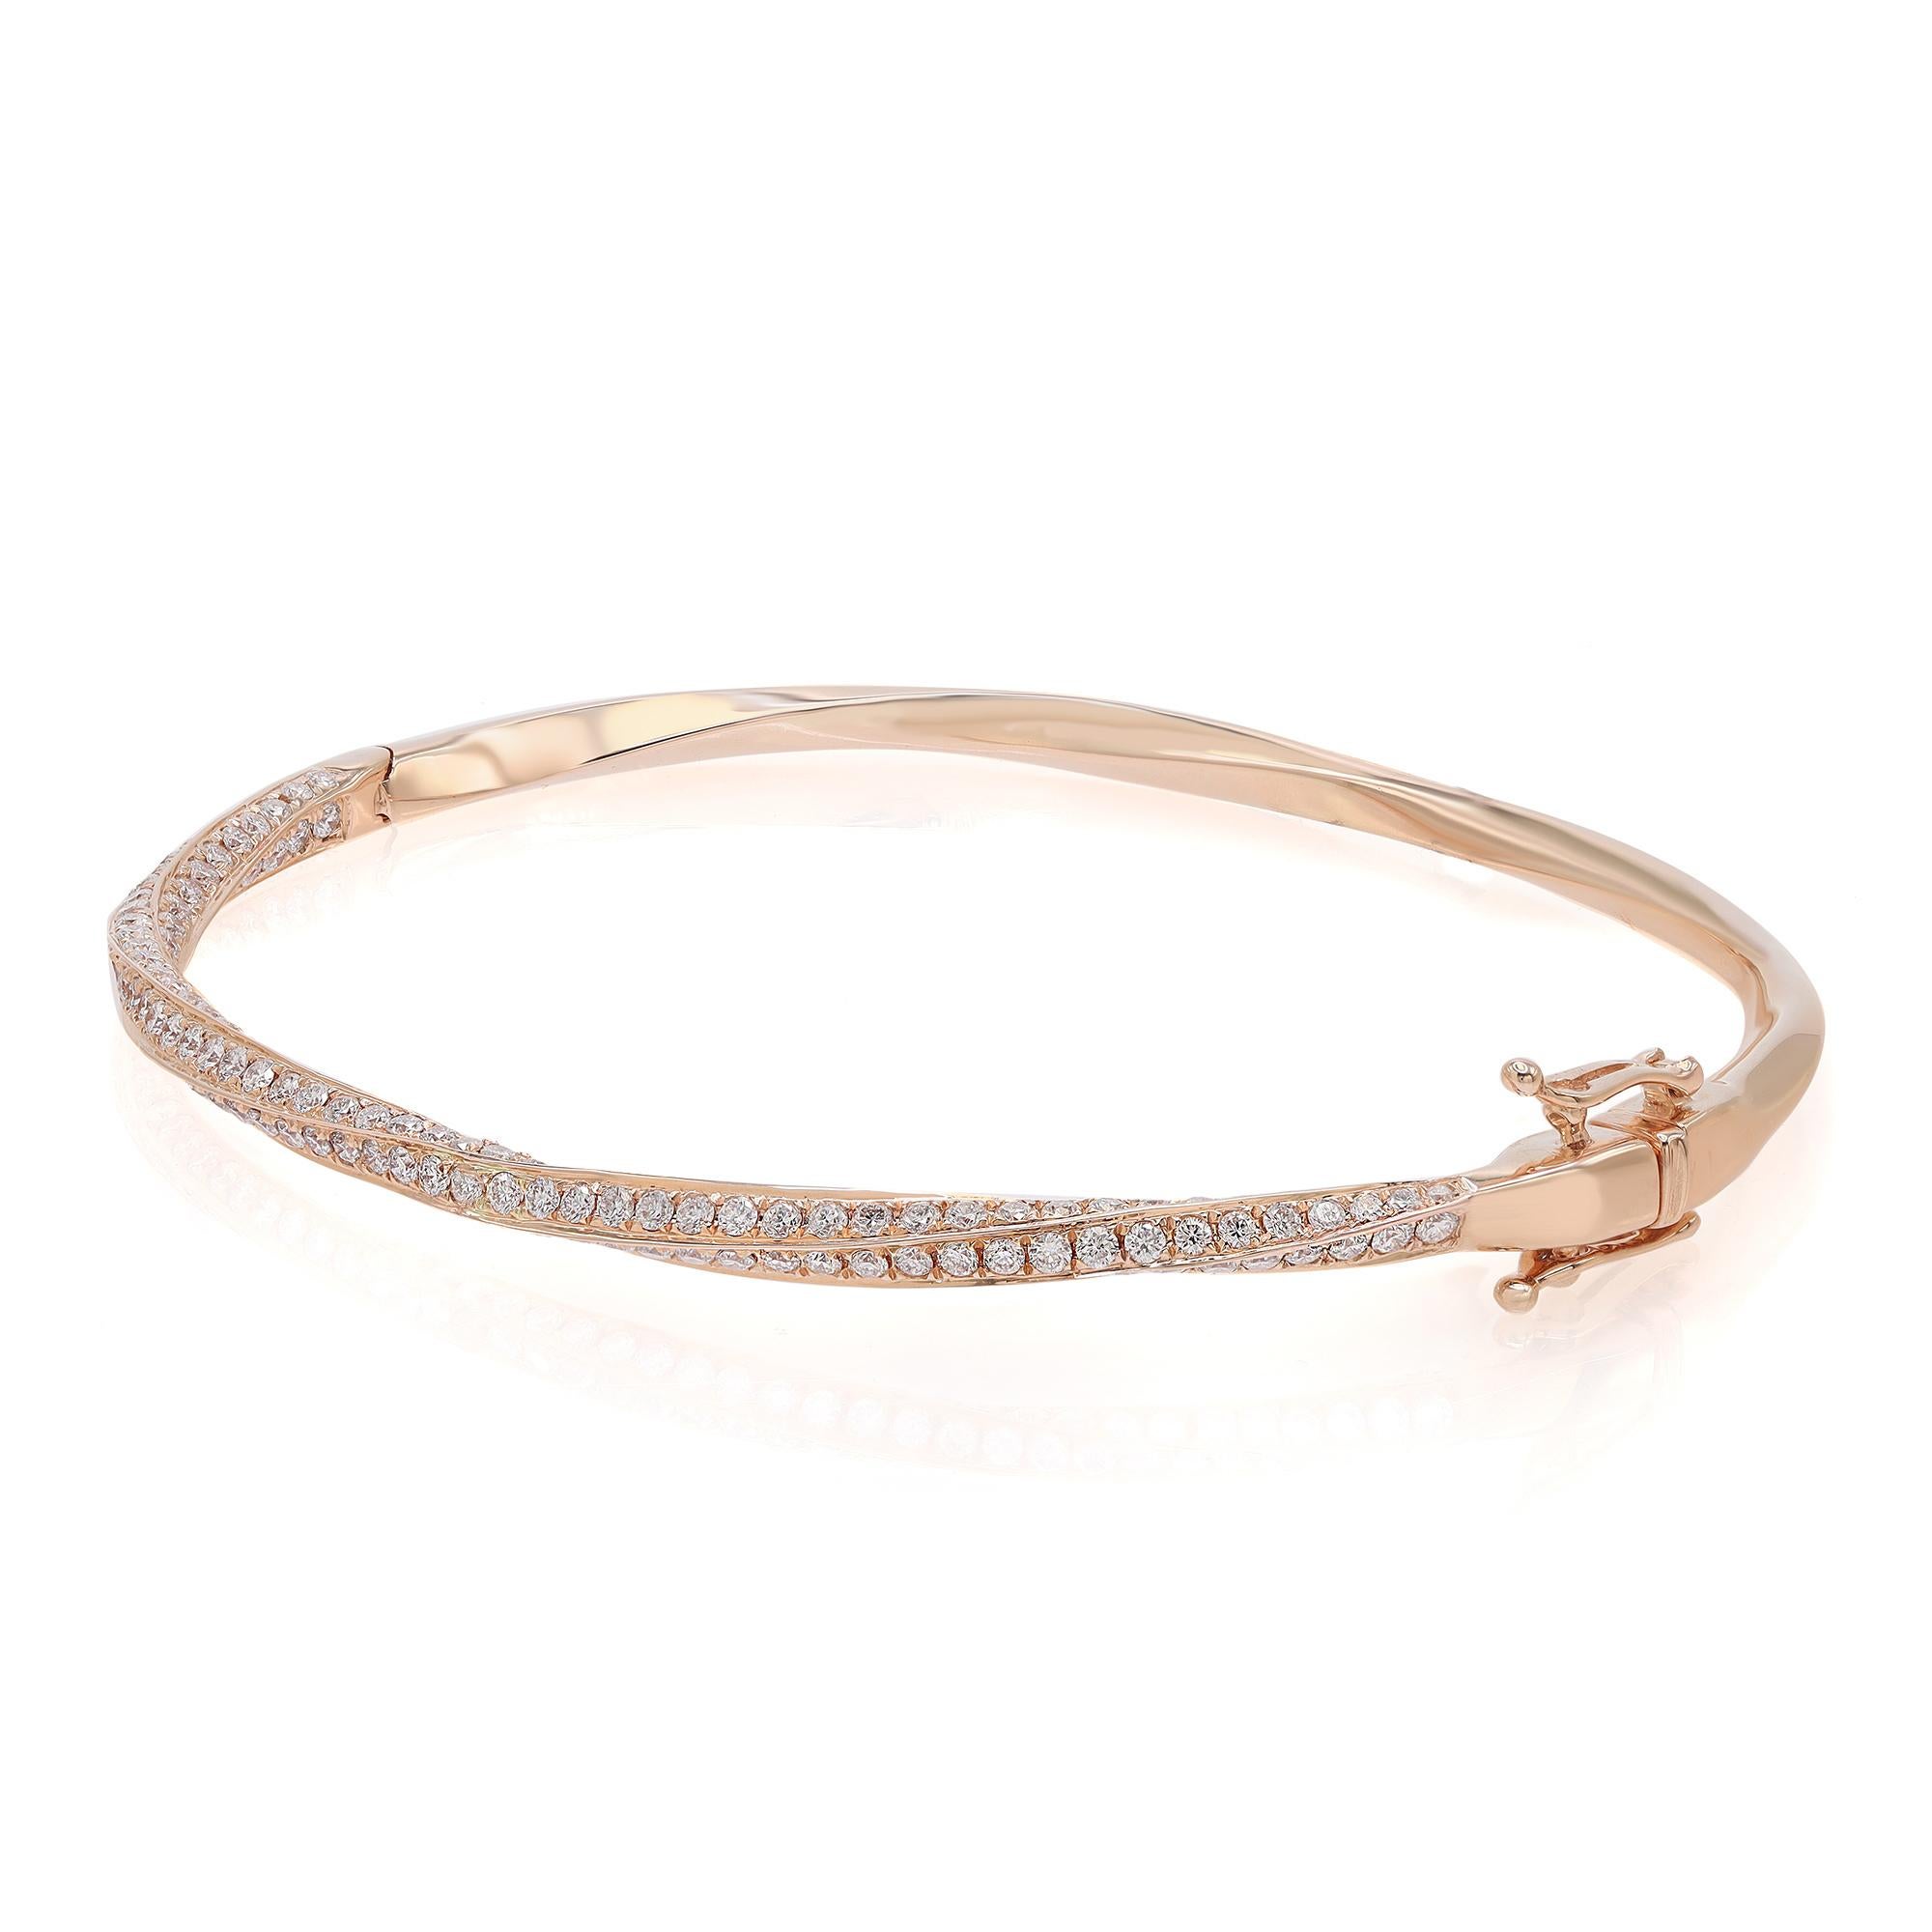 Modern Rachel Koen Pave Set Round Cut Diamond Bangle Bracelet 18K Rose Gold 2.07Cttw For Sale